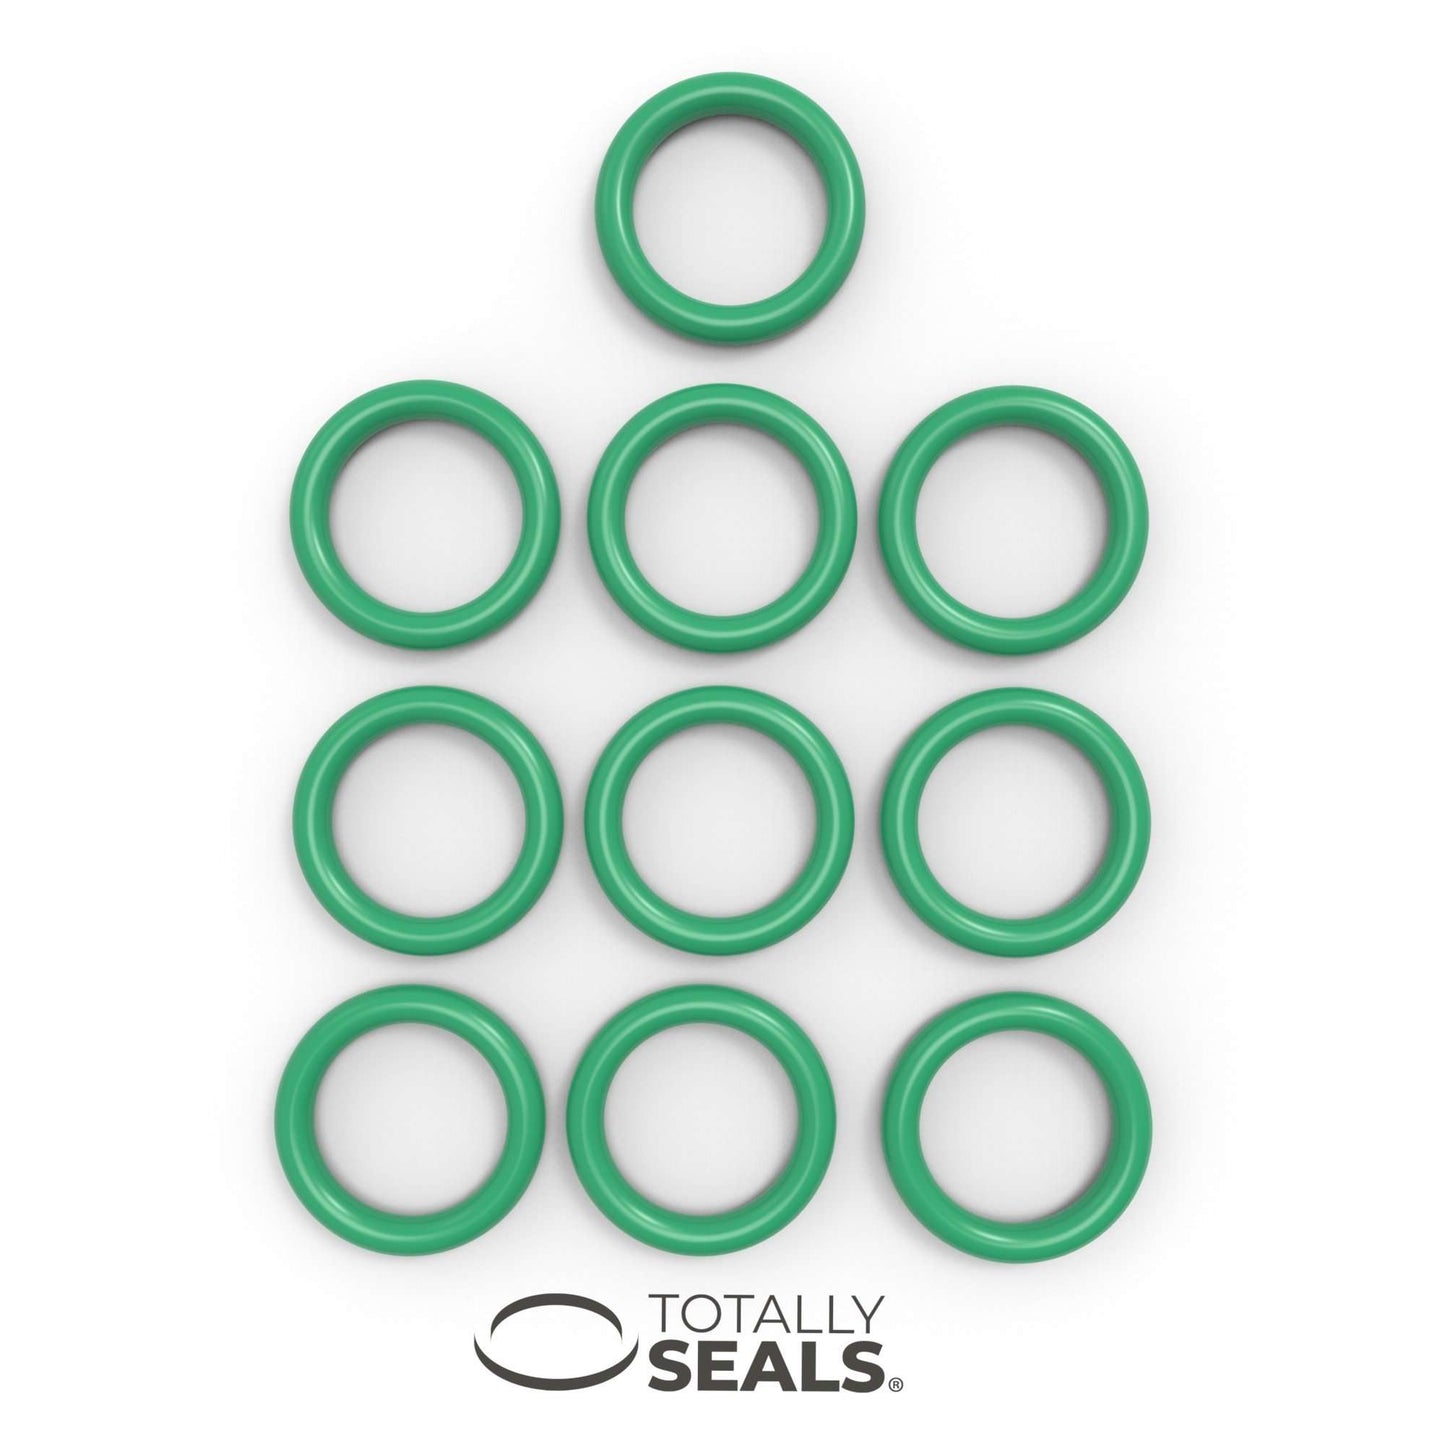 5mm x 2mm (9mm OD) FKM (Viton™) O-Rings - Totally Seals®